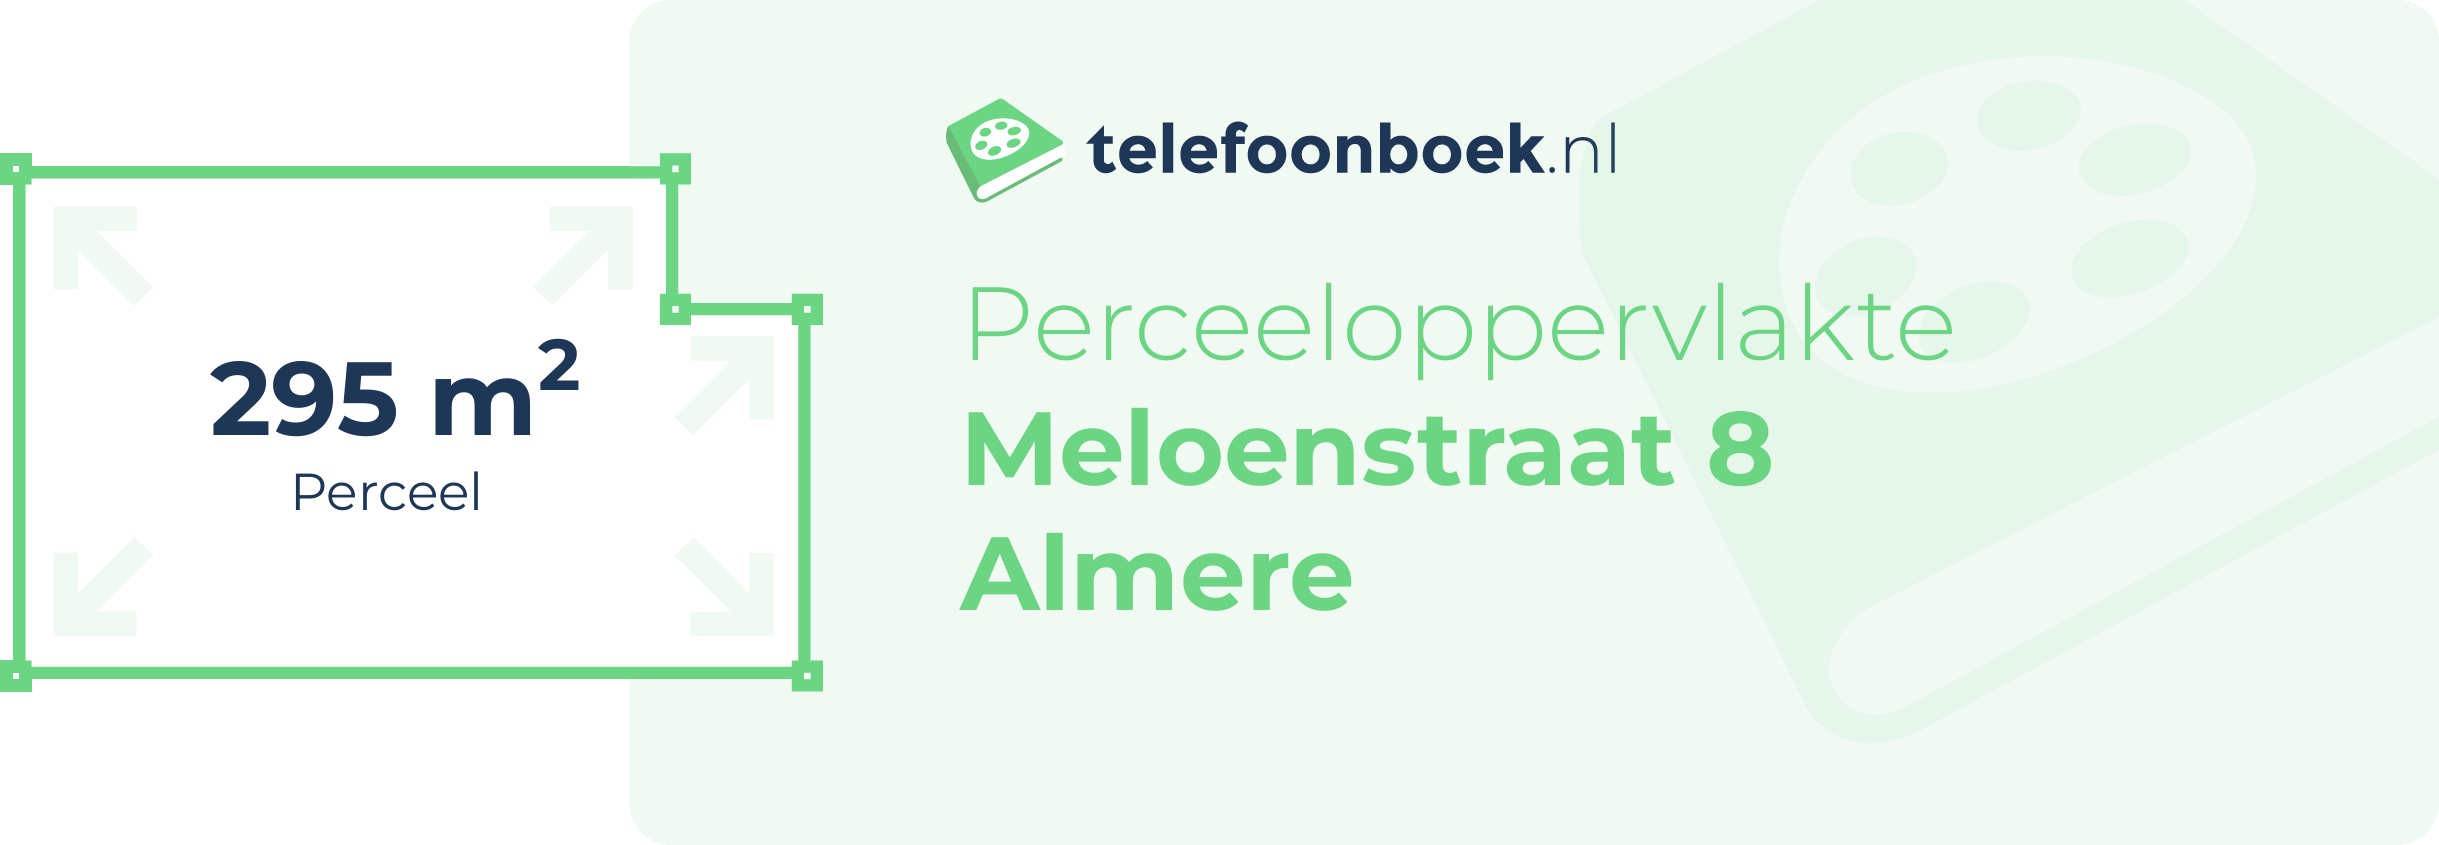 Perceeloppervlakte Meloenstraat 8 Almere